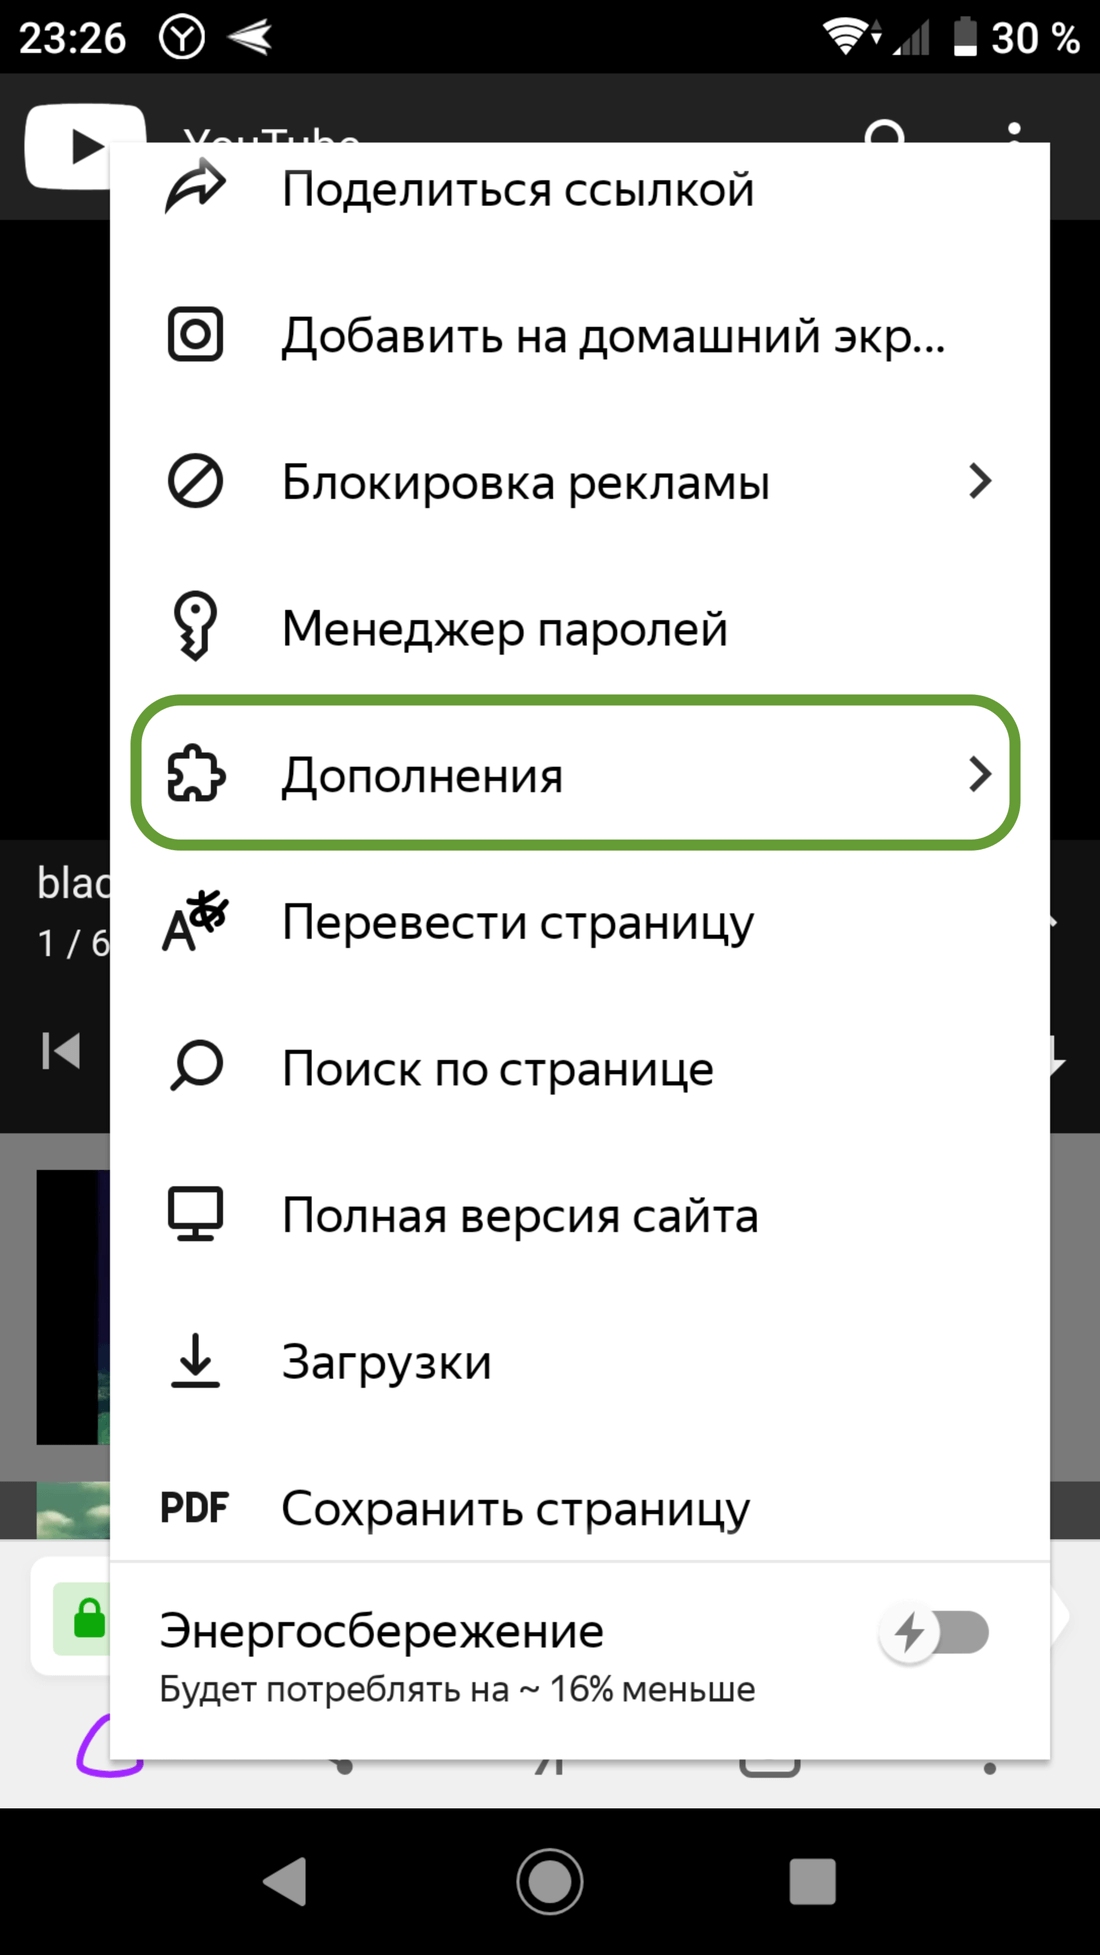 Как скачать видео с ютуба на андроид через Яндекс браузер и дополнение SaveFrom